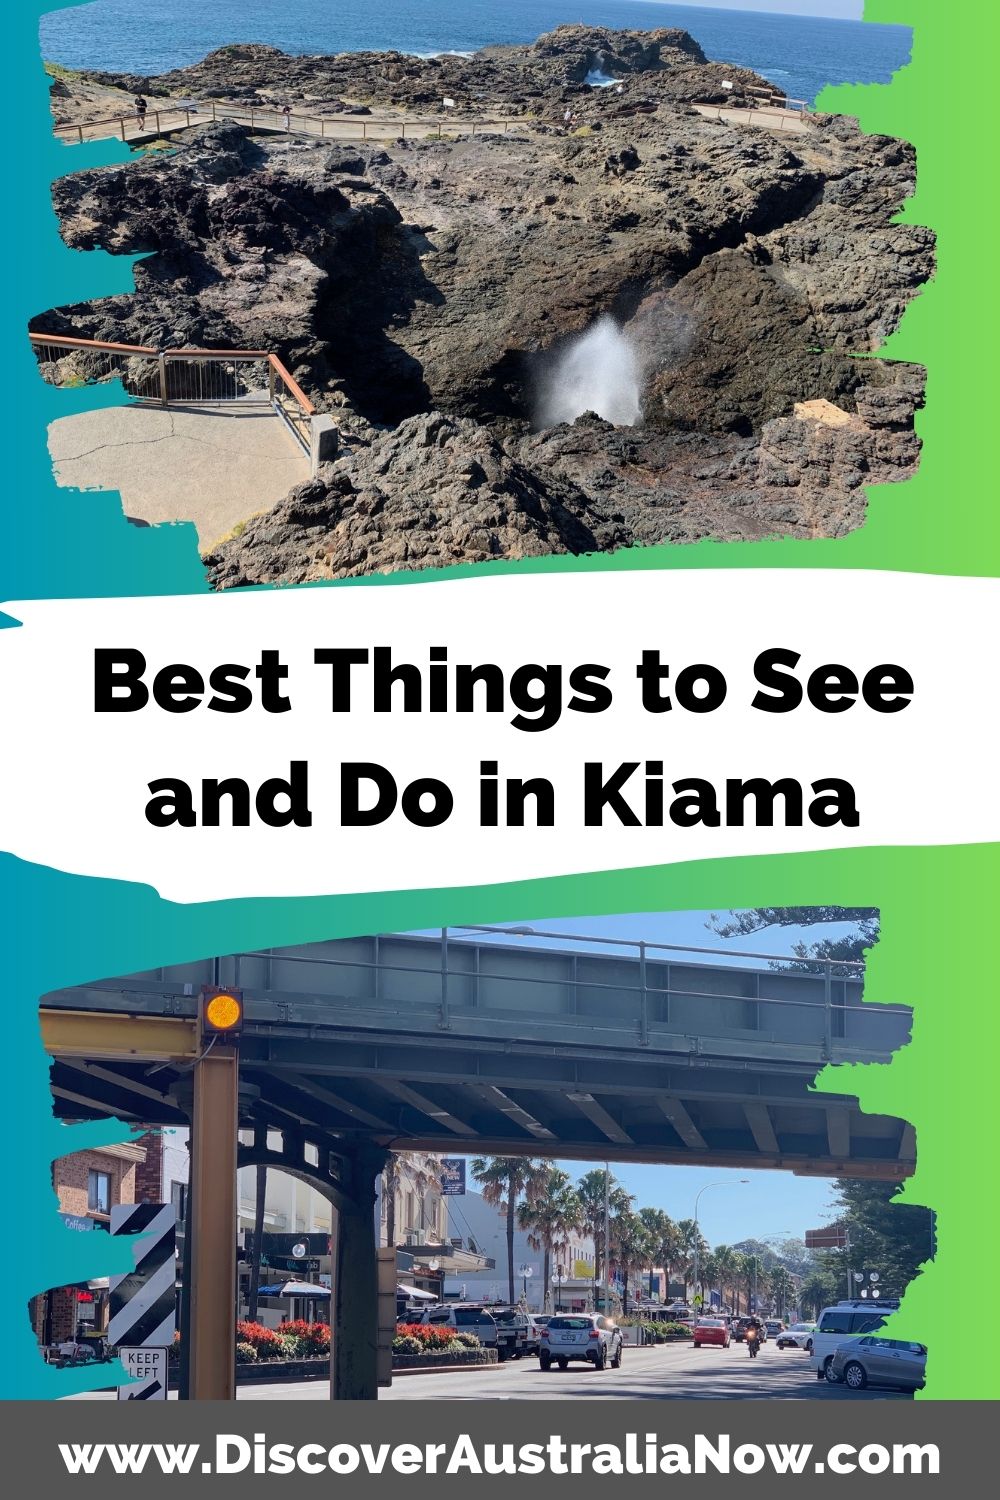 The Kiama Blowhole and Kiama Main Street are 2 great things to see and do in Kiama.